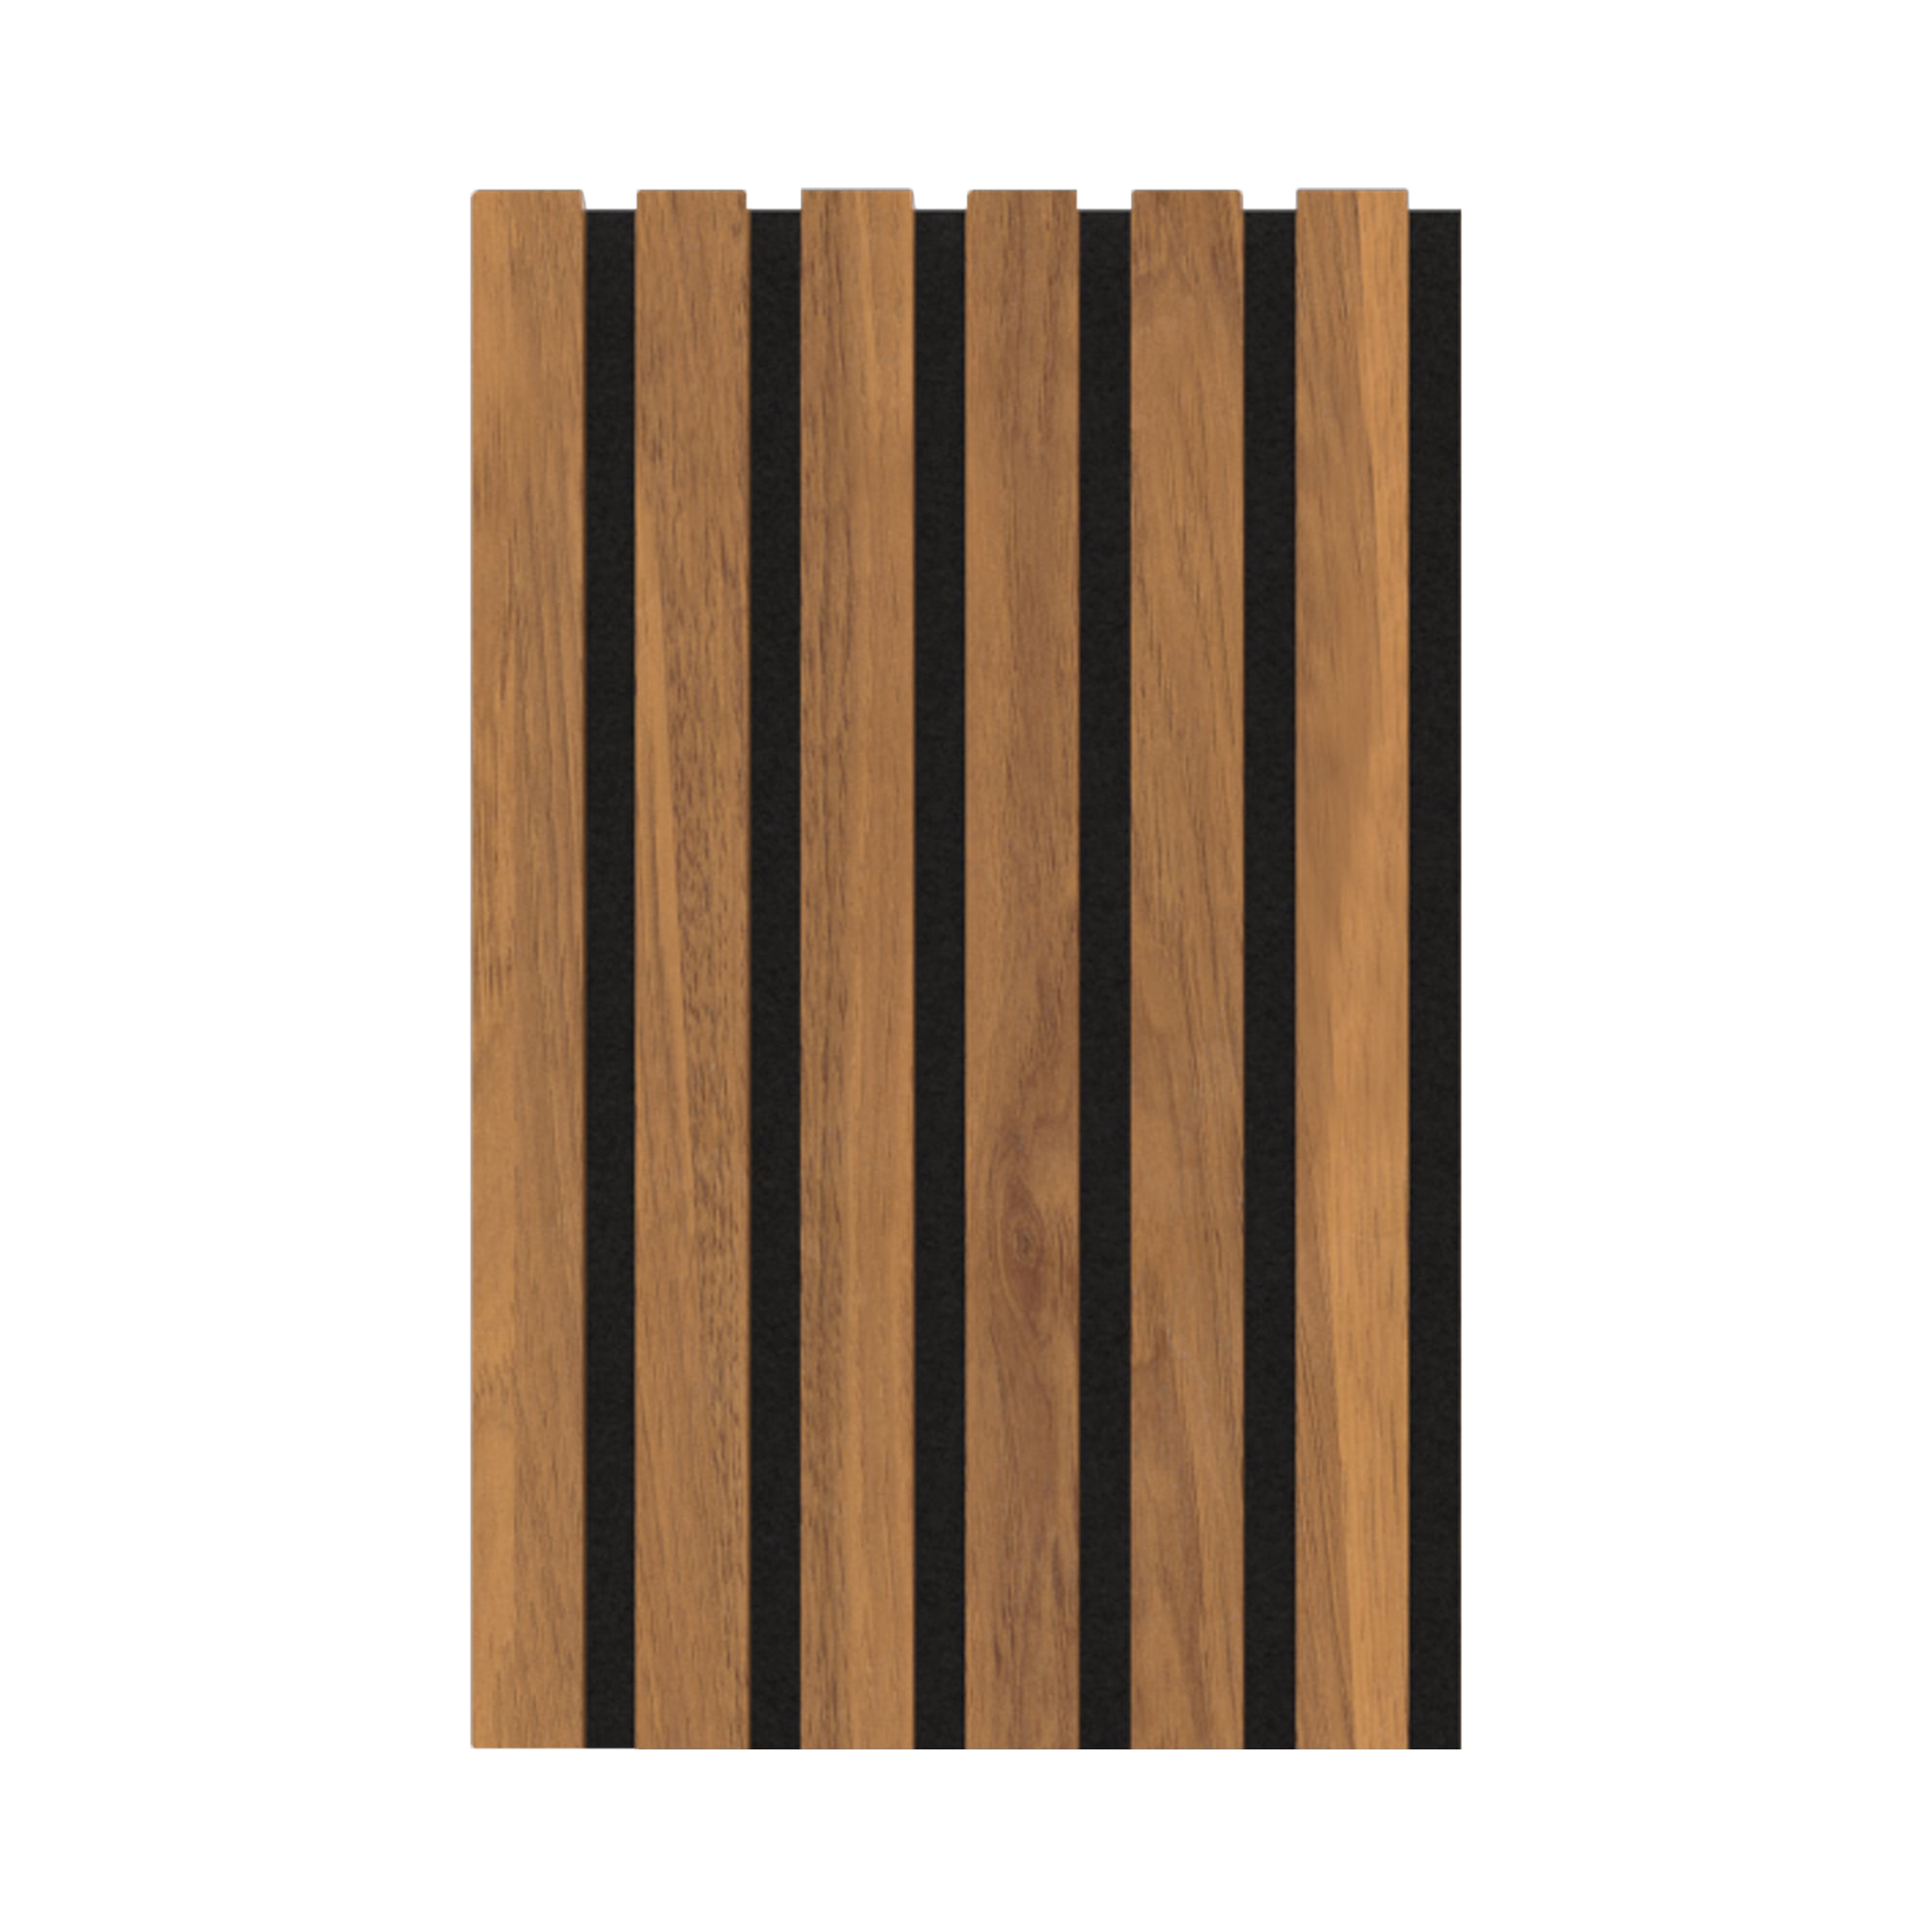 Sample Product 30x12.5x2.1 cm  Wallnut Acoustic Wood Wall Panels